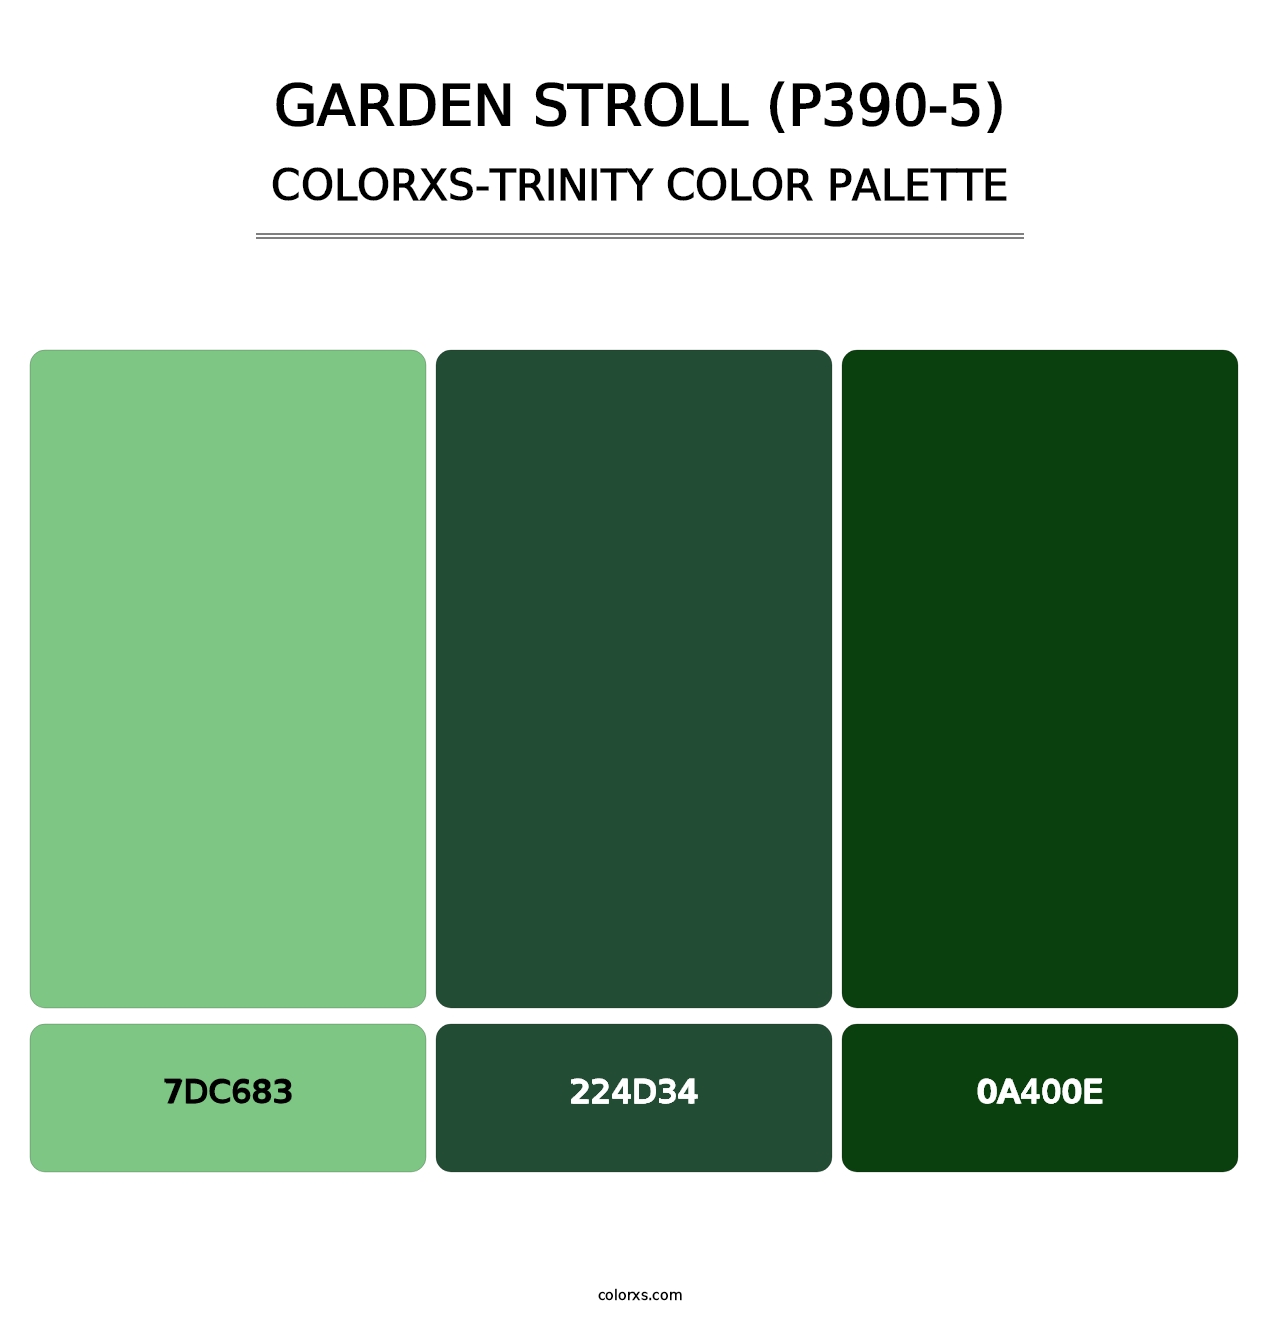 Garden Stroll (P390-5) - Colorxs Trinity Palette